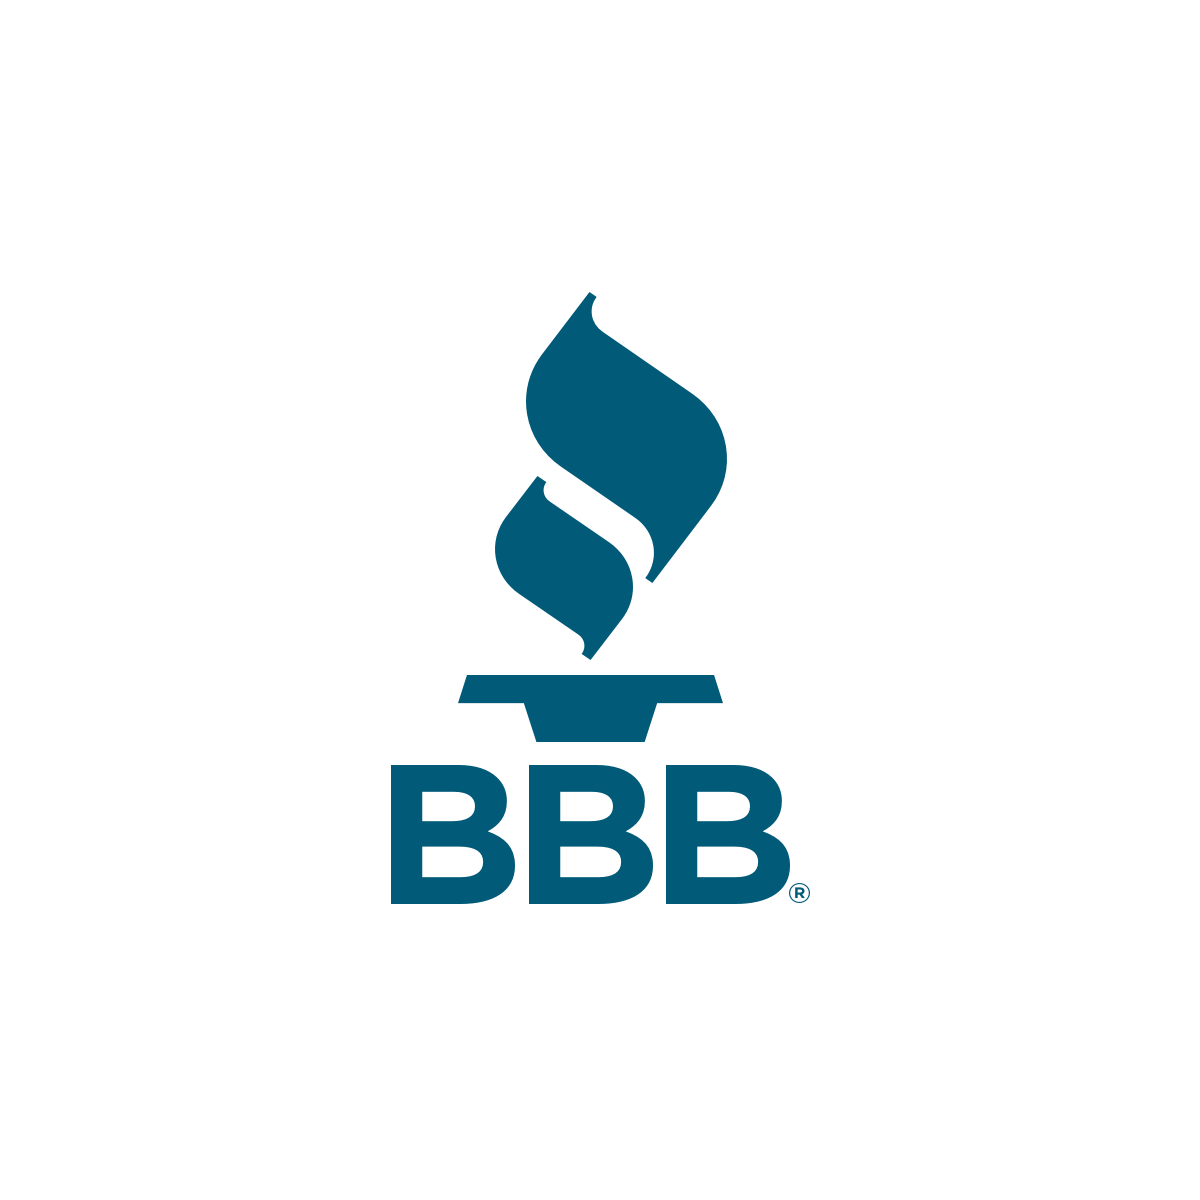 bbb_logo_square